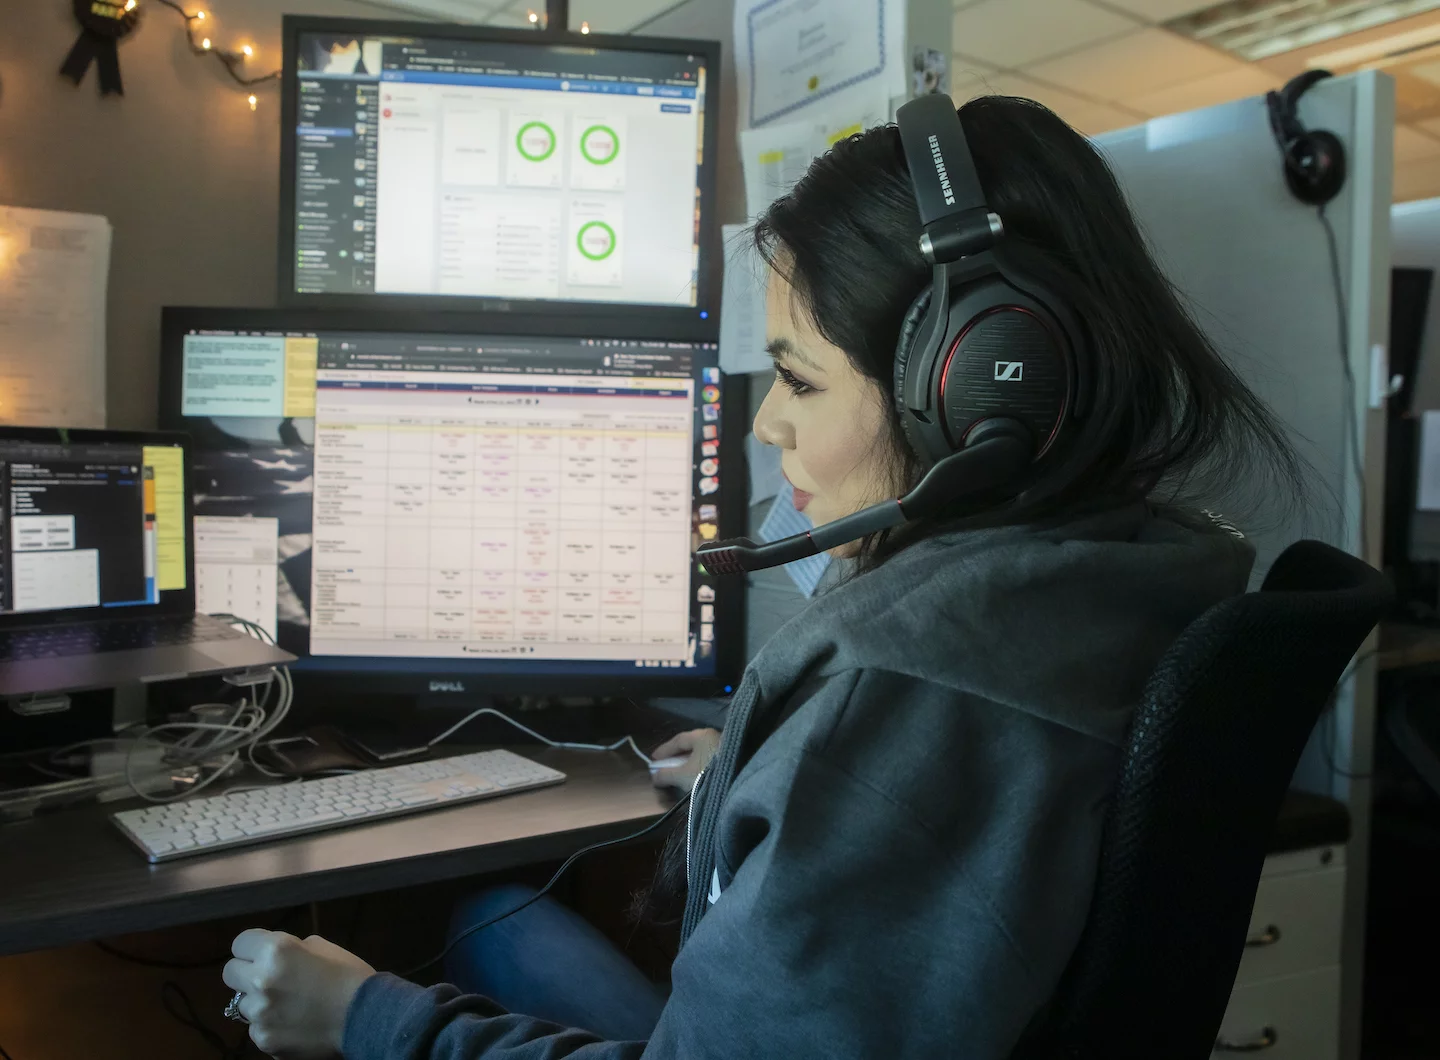 iostudio contact center representative, Brisa Morris, engaging with a customer on headphones looking at custom crm platform on computer.